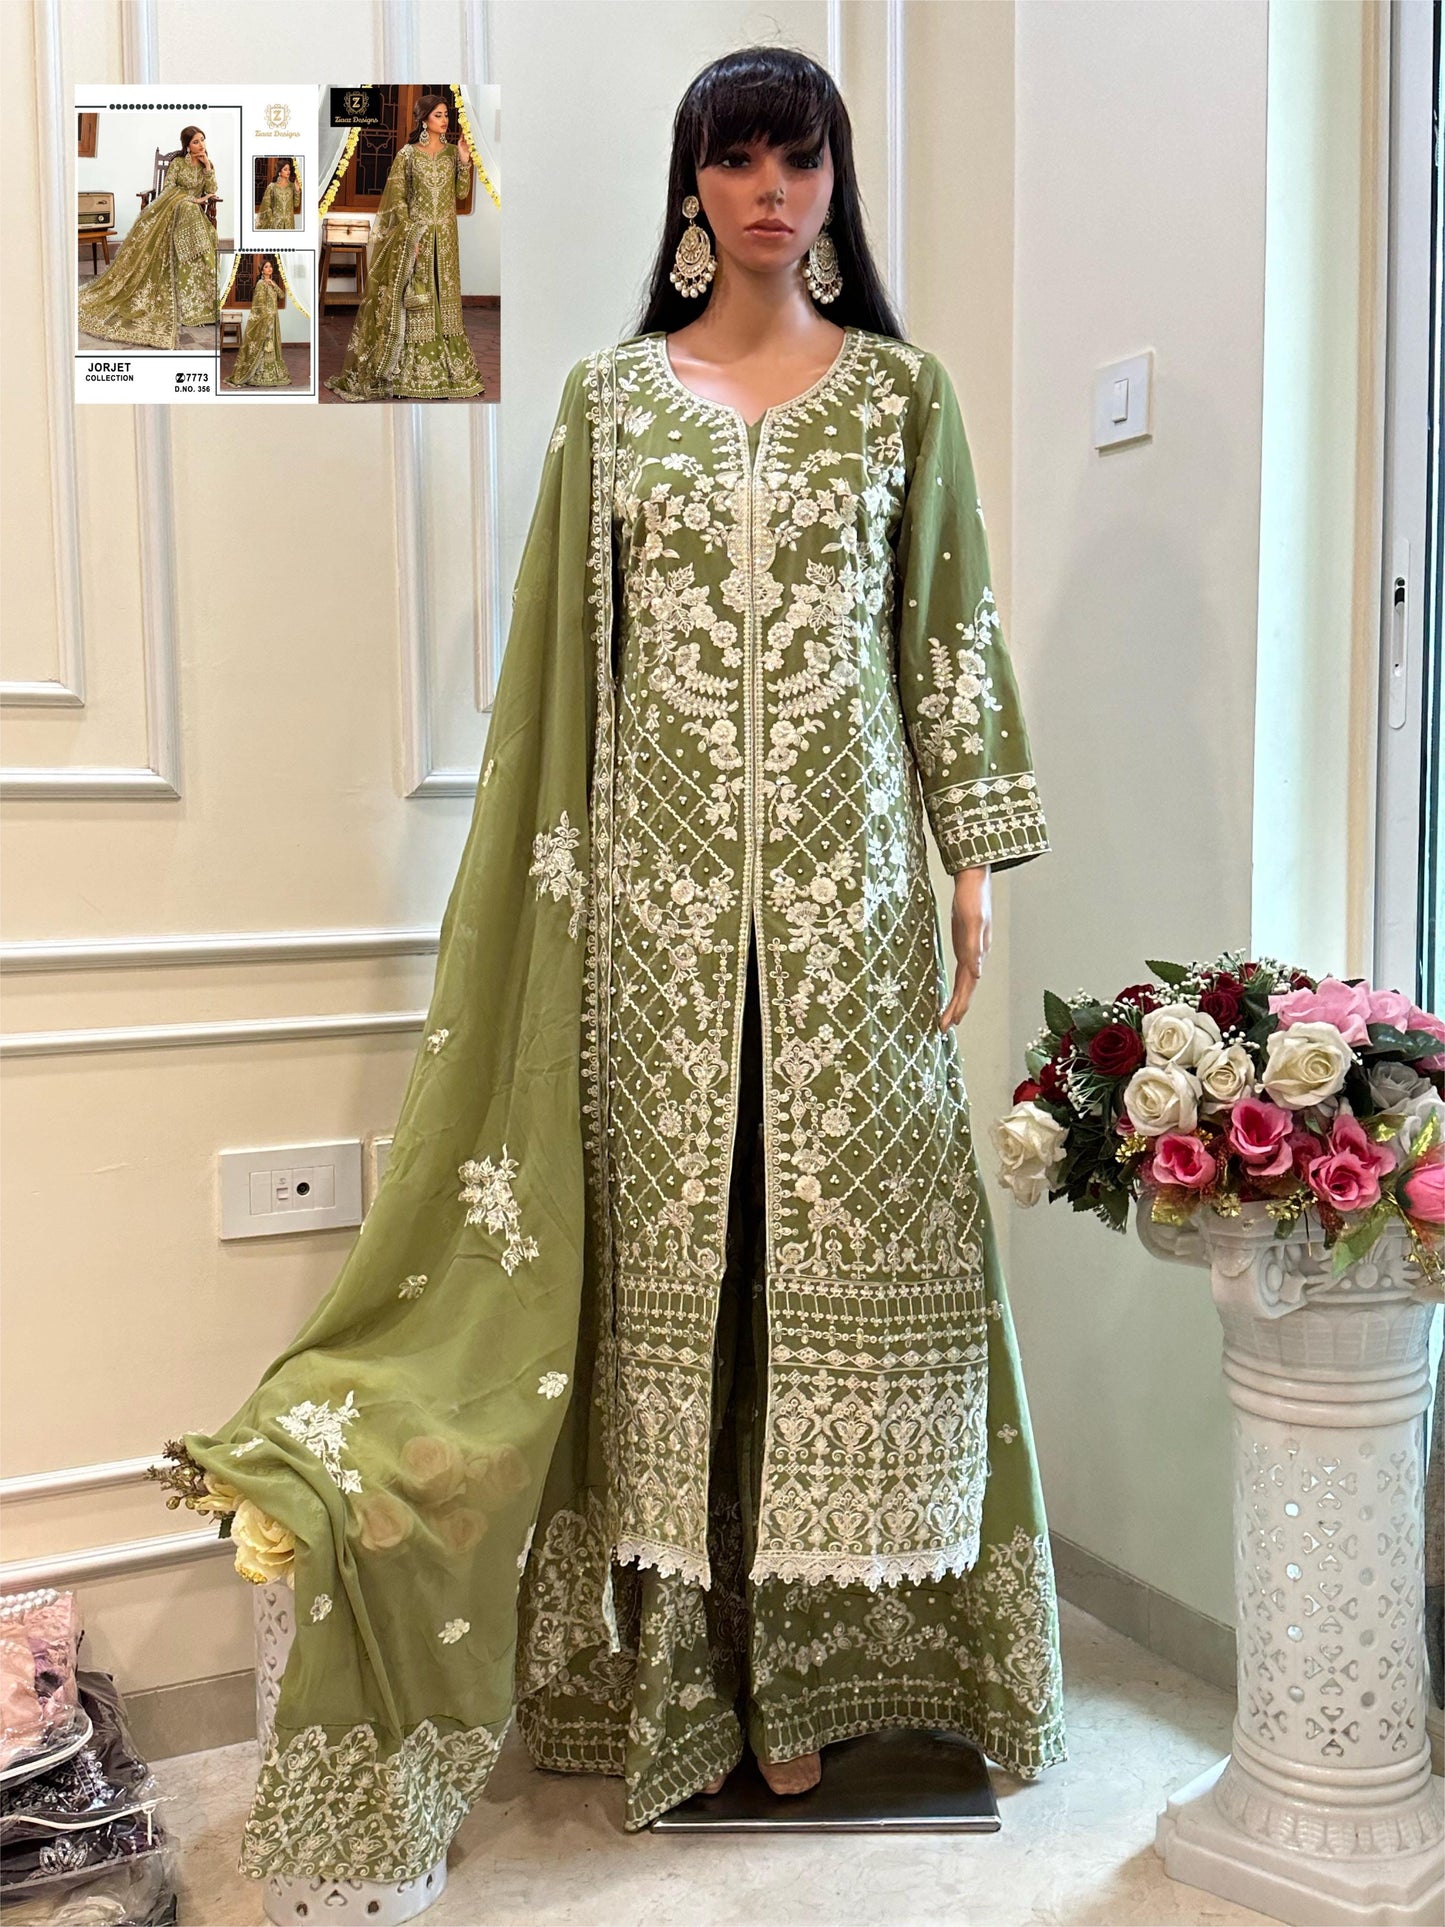 Ziaaz 356 Embroidery Pakistani Salwar Kameez Designer Suit Designer Suits Shopin Di Apparels 